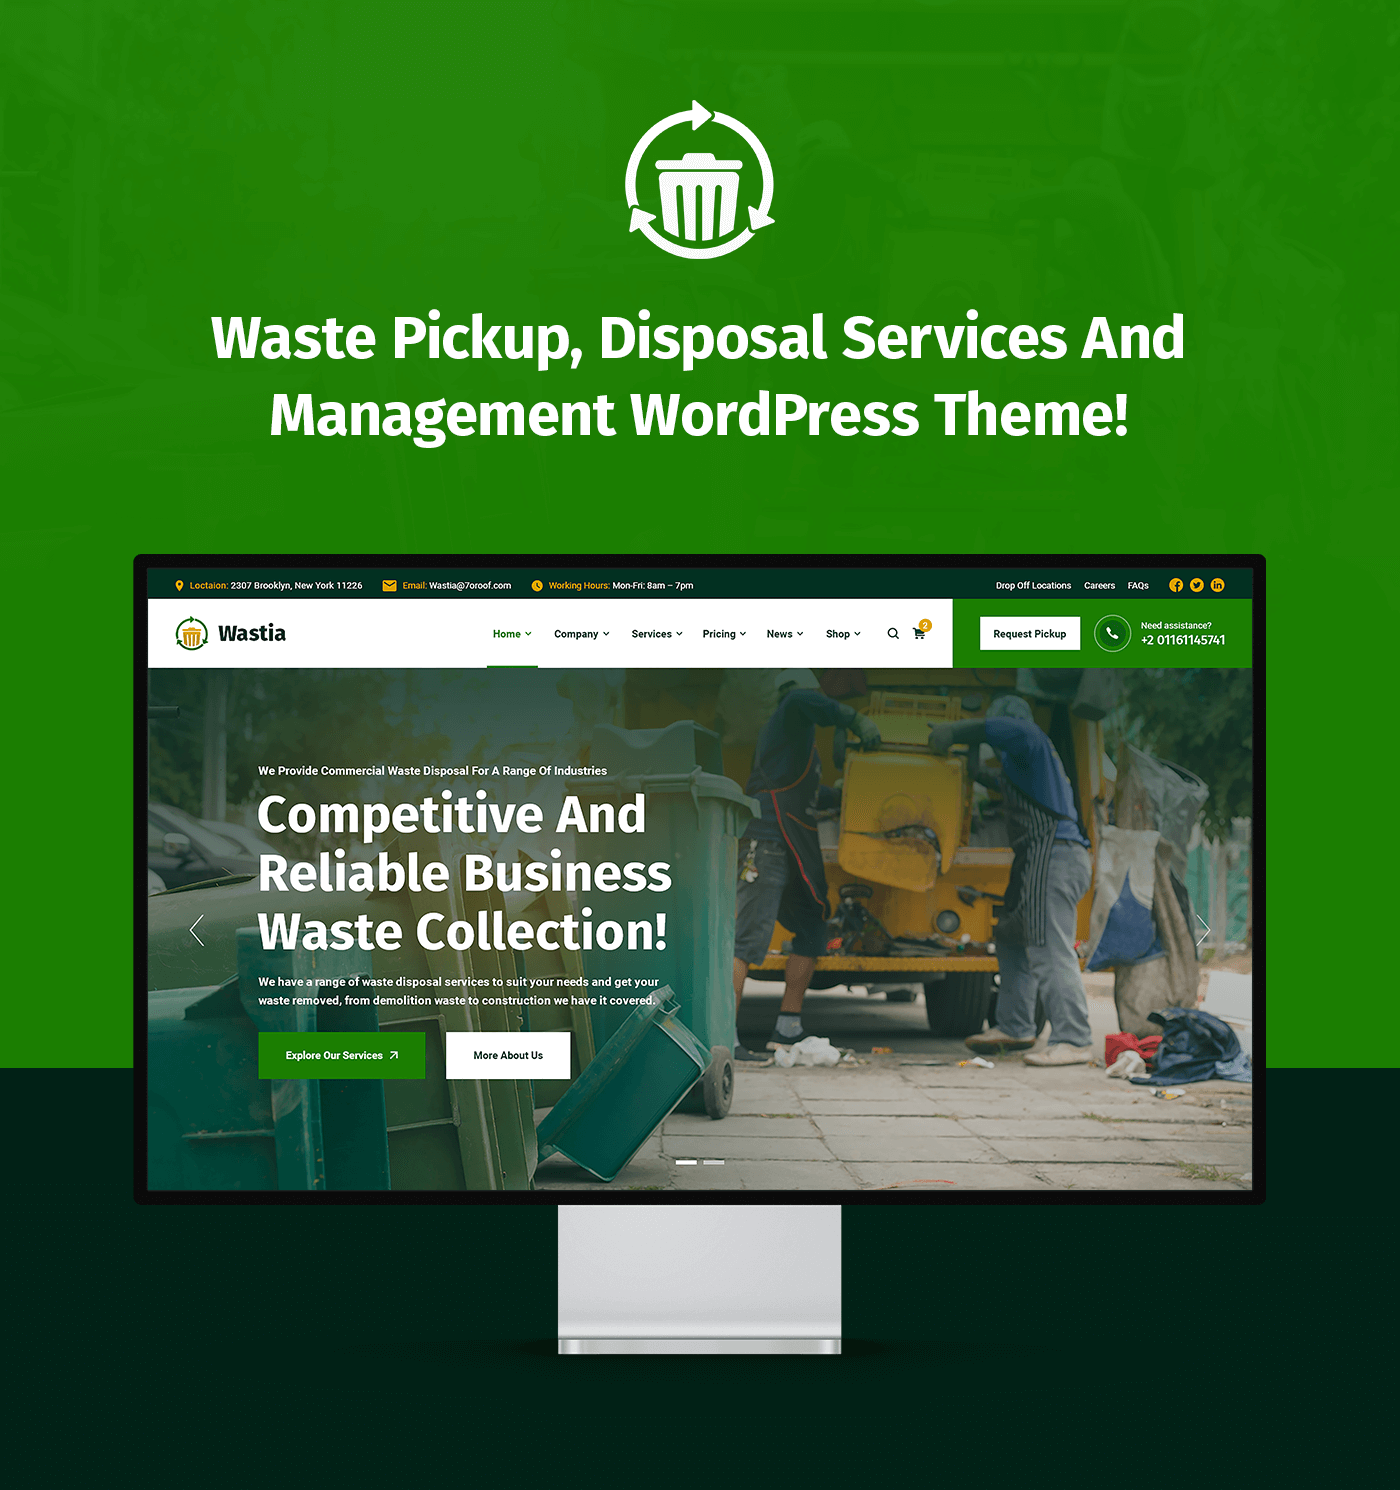 Wastia - Waste Pickup And Disposal Services WordPress Theme - 4